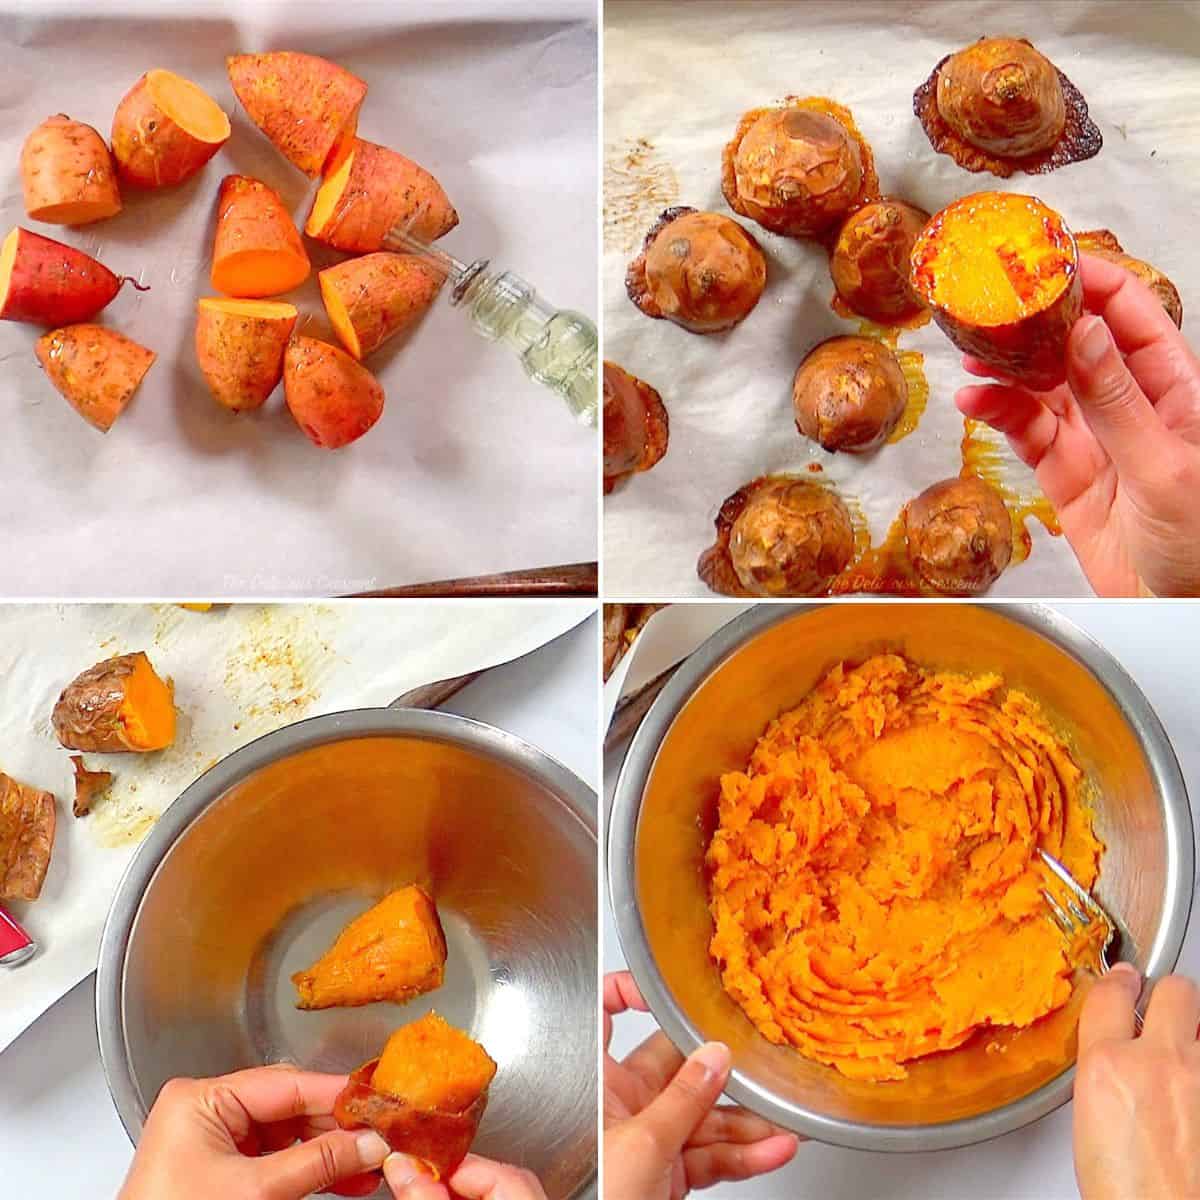 Roasting sweet potatoes and mashing.